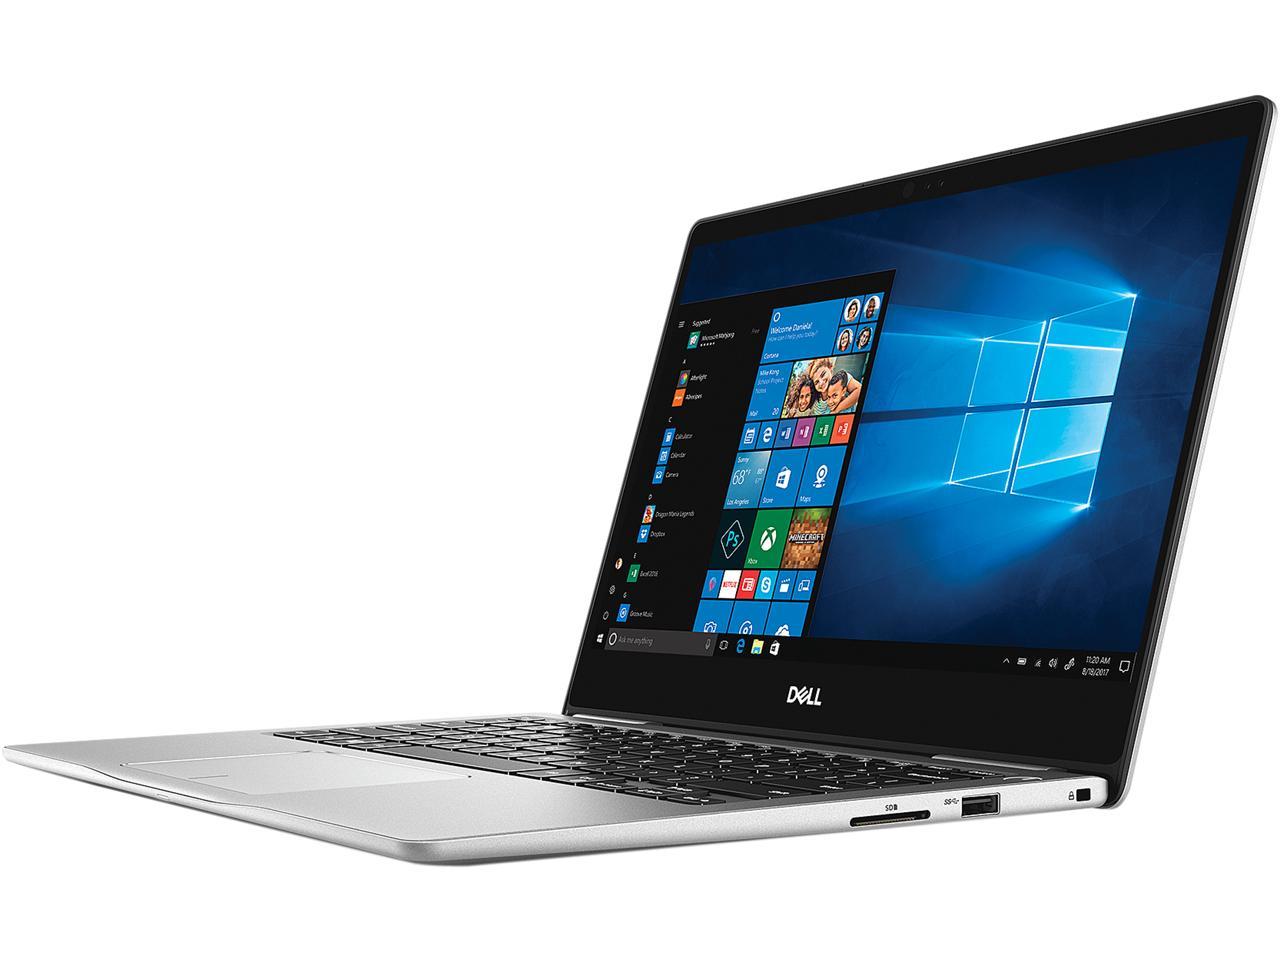 DELL Laptop Inspiron 7370 i7370-7749SLV Intel Core i7 8th Gen 8550U (1.80 GHz) 16 GB Memory 512 GB SSD Intel UHD Graphics 620 13.3" Touchscreen Windows 10 Home 64-Bit